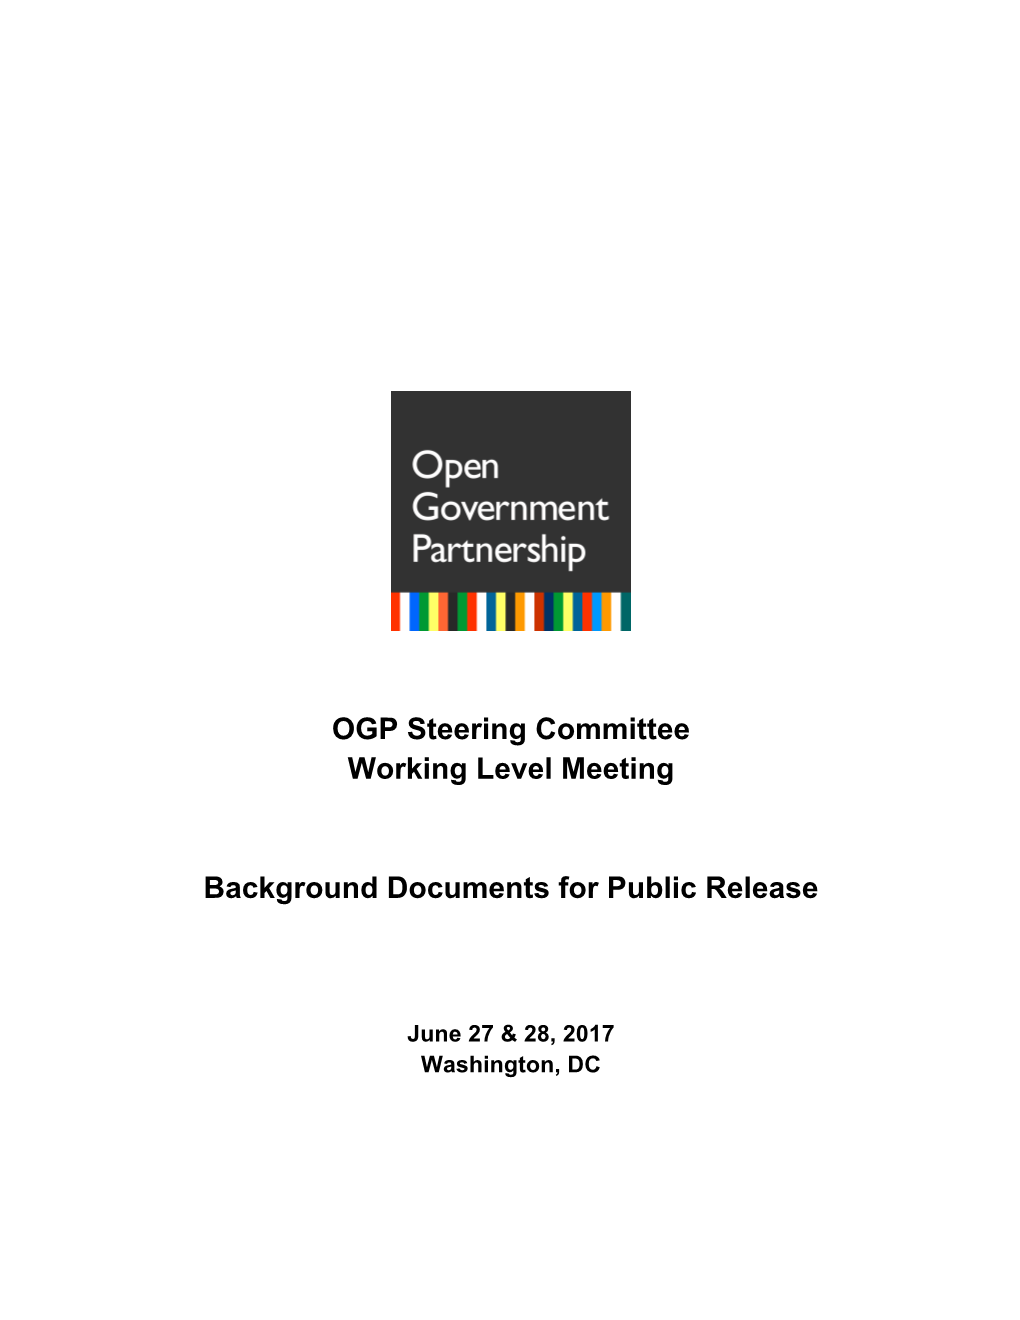 OGP Steering Committee Working Level Meeting Background